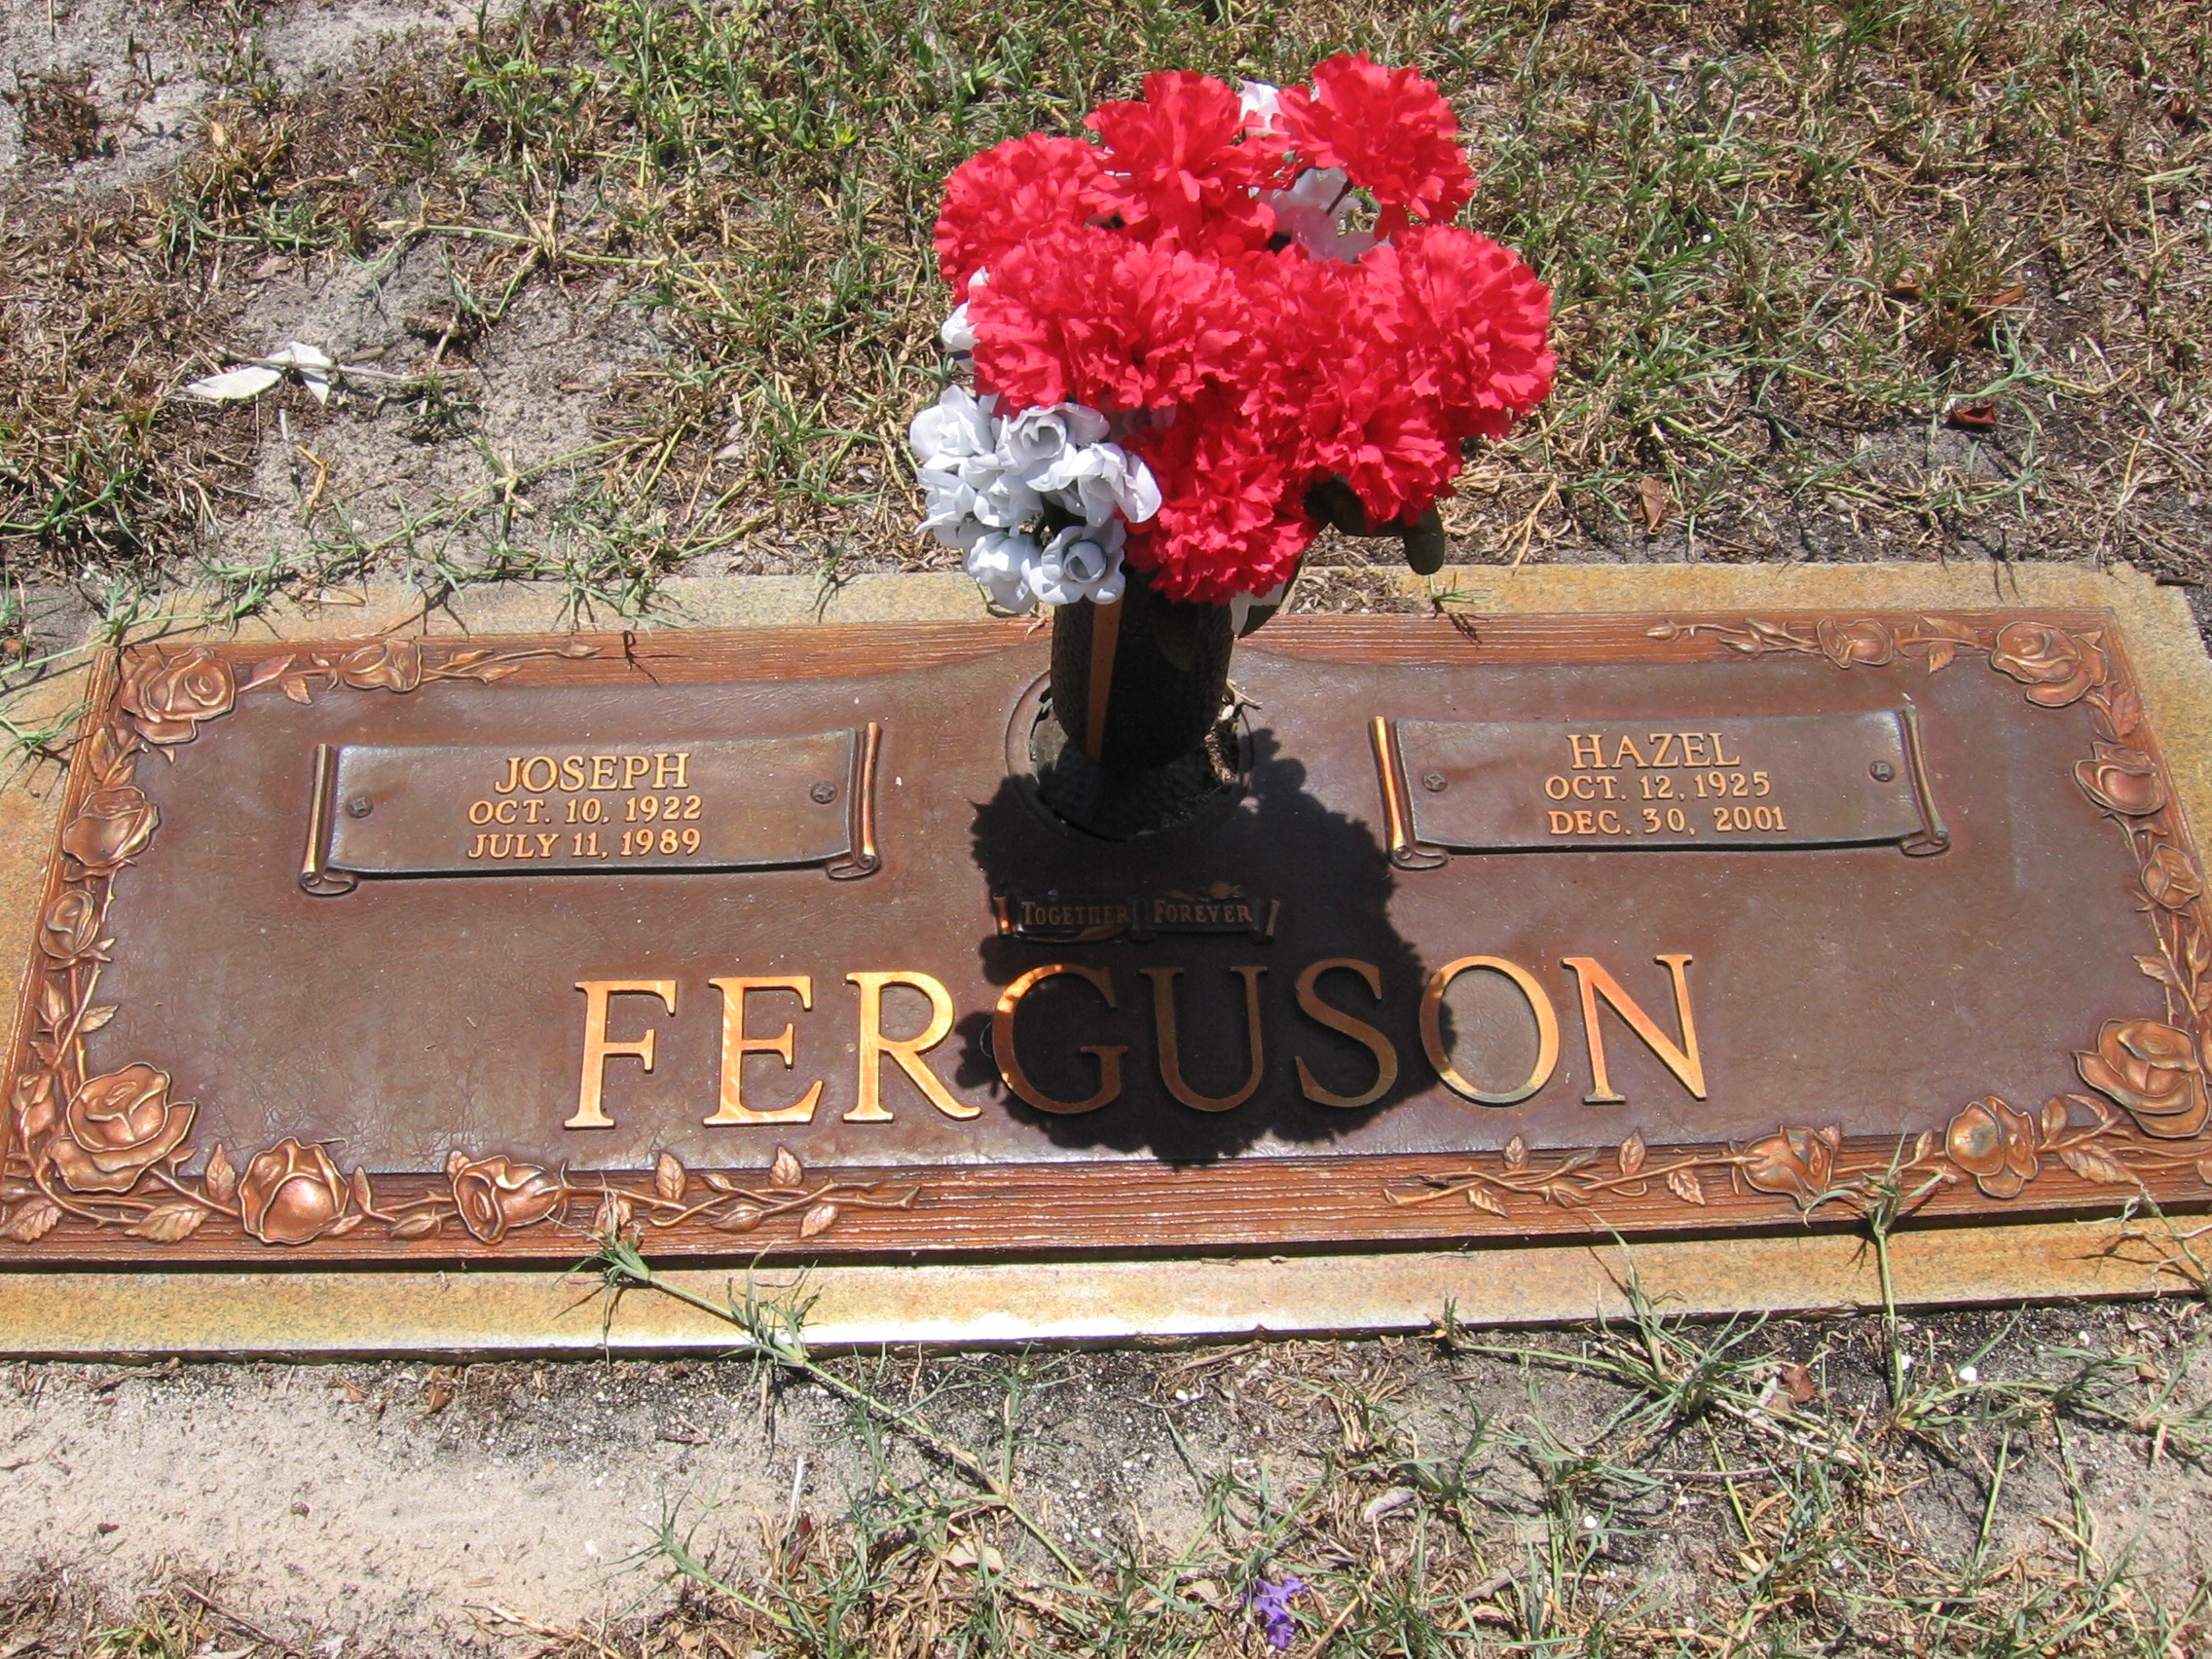 Joseph Ferguson